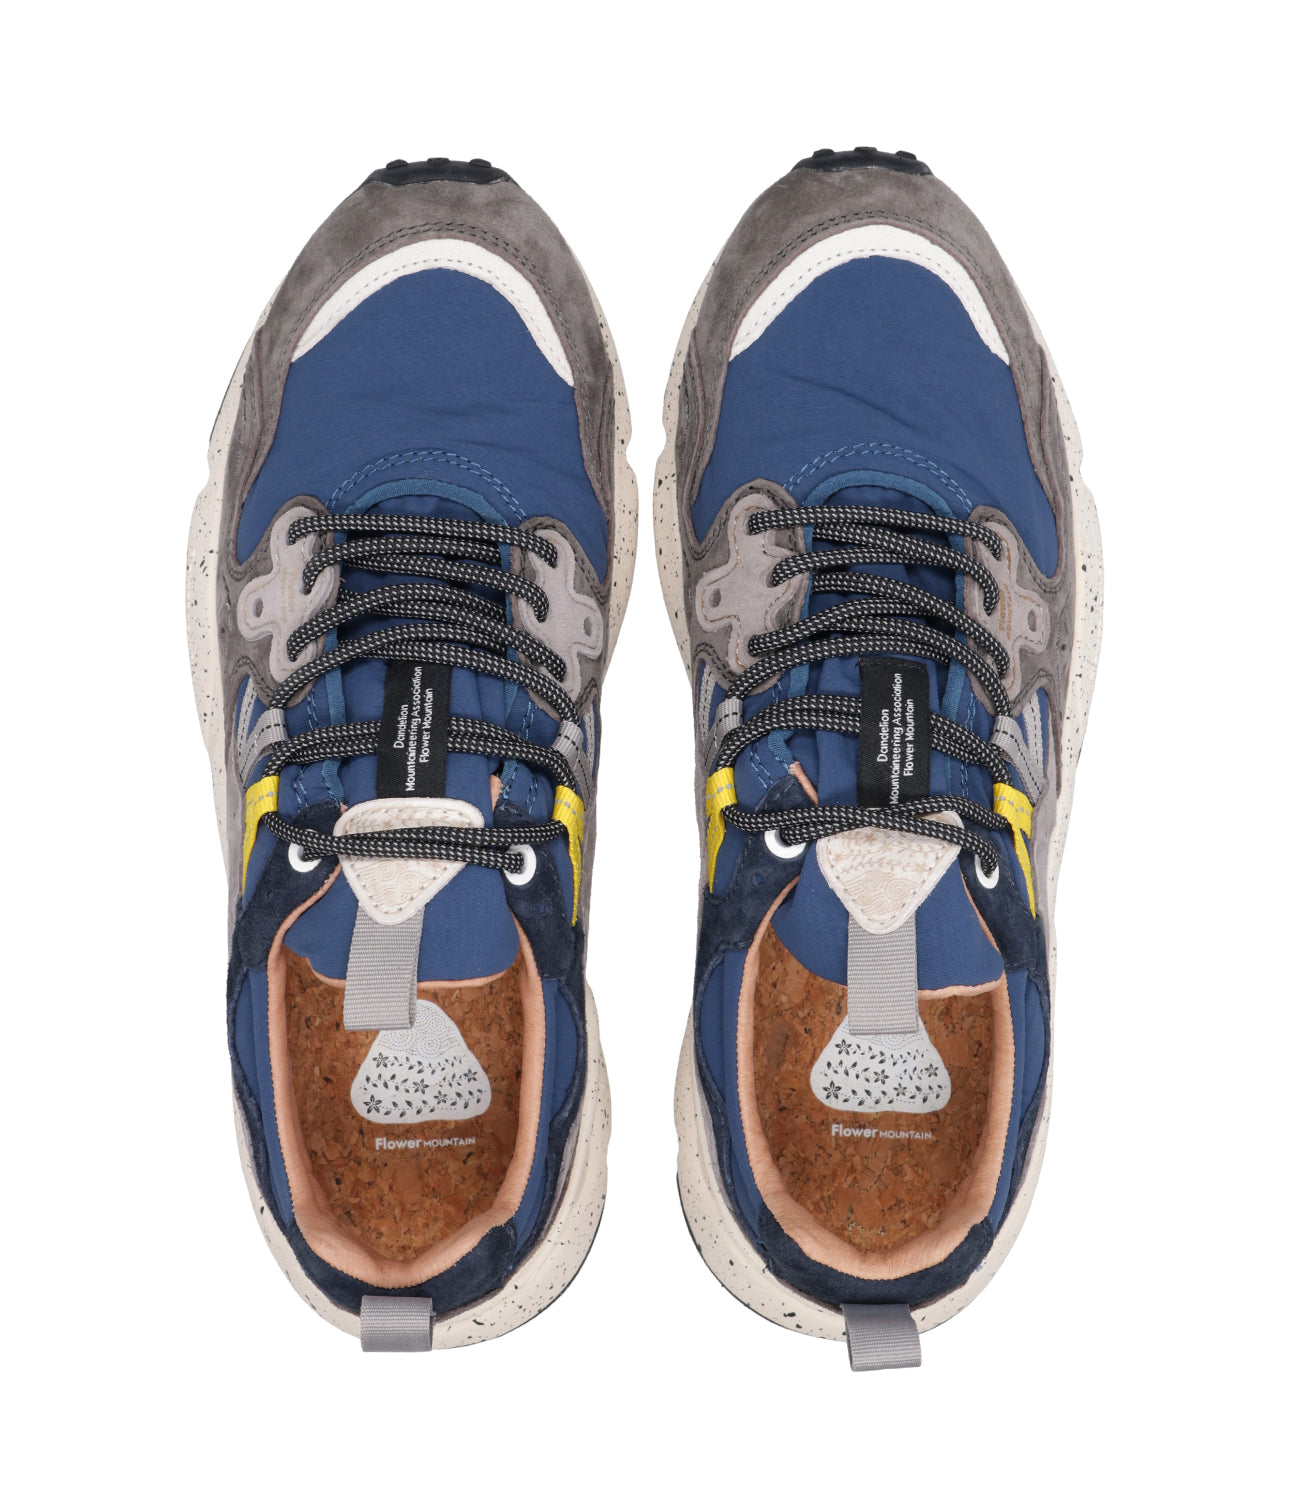 Flower Montain | Sneakers Grigio e Blu Navy